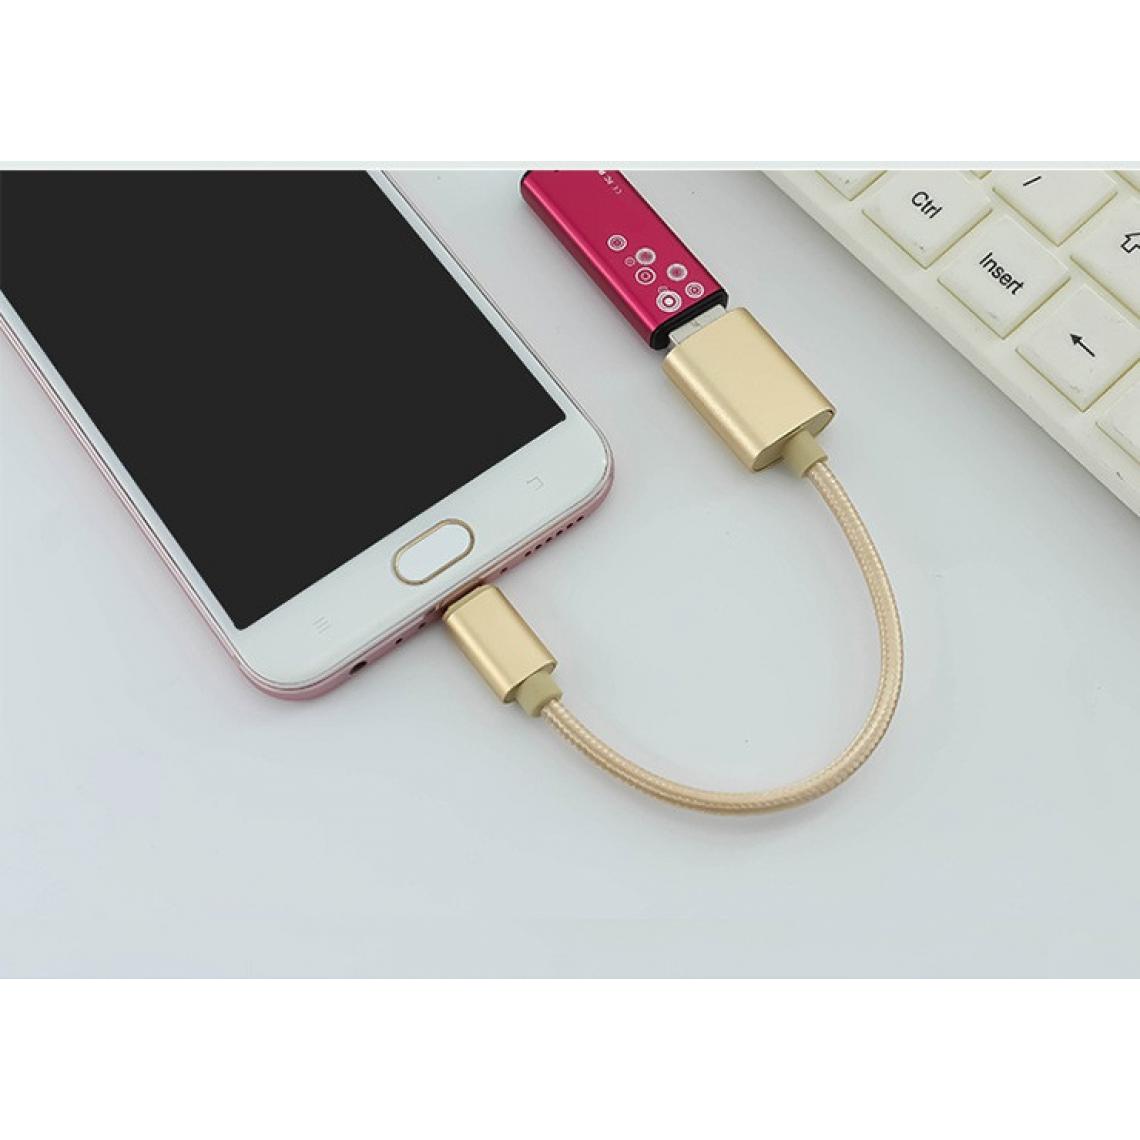 Shot - Adaptateur Type C/USB pour "SAMSUNG Galaxy A11" Smartphone & MAC USB-C Clef (OR) - Autres accessoires smartphone